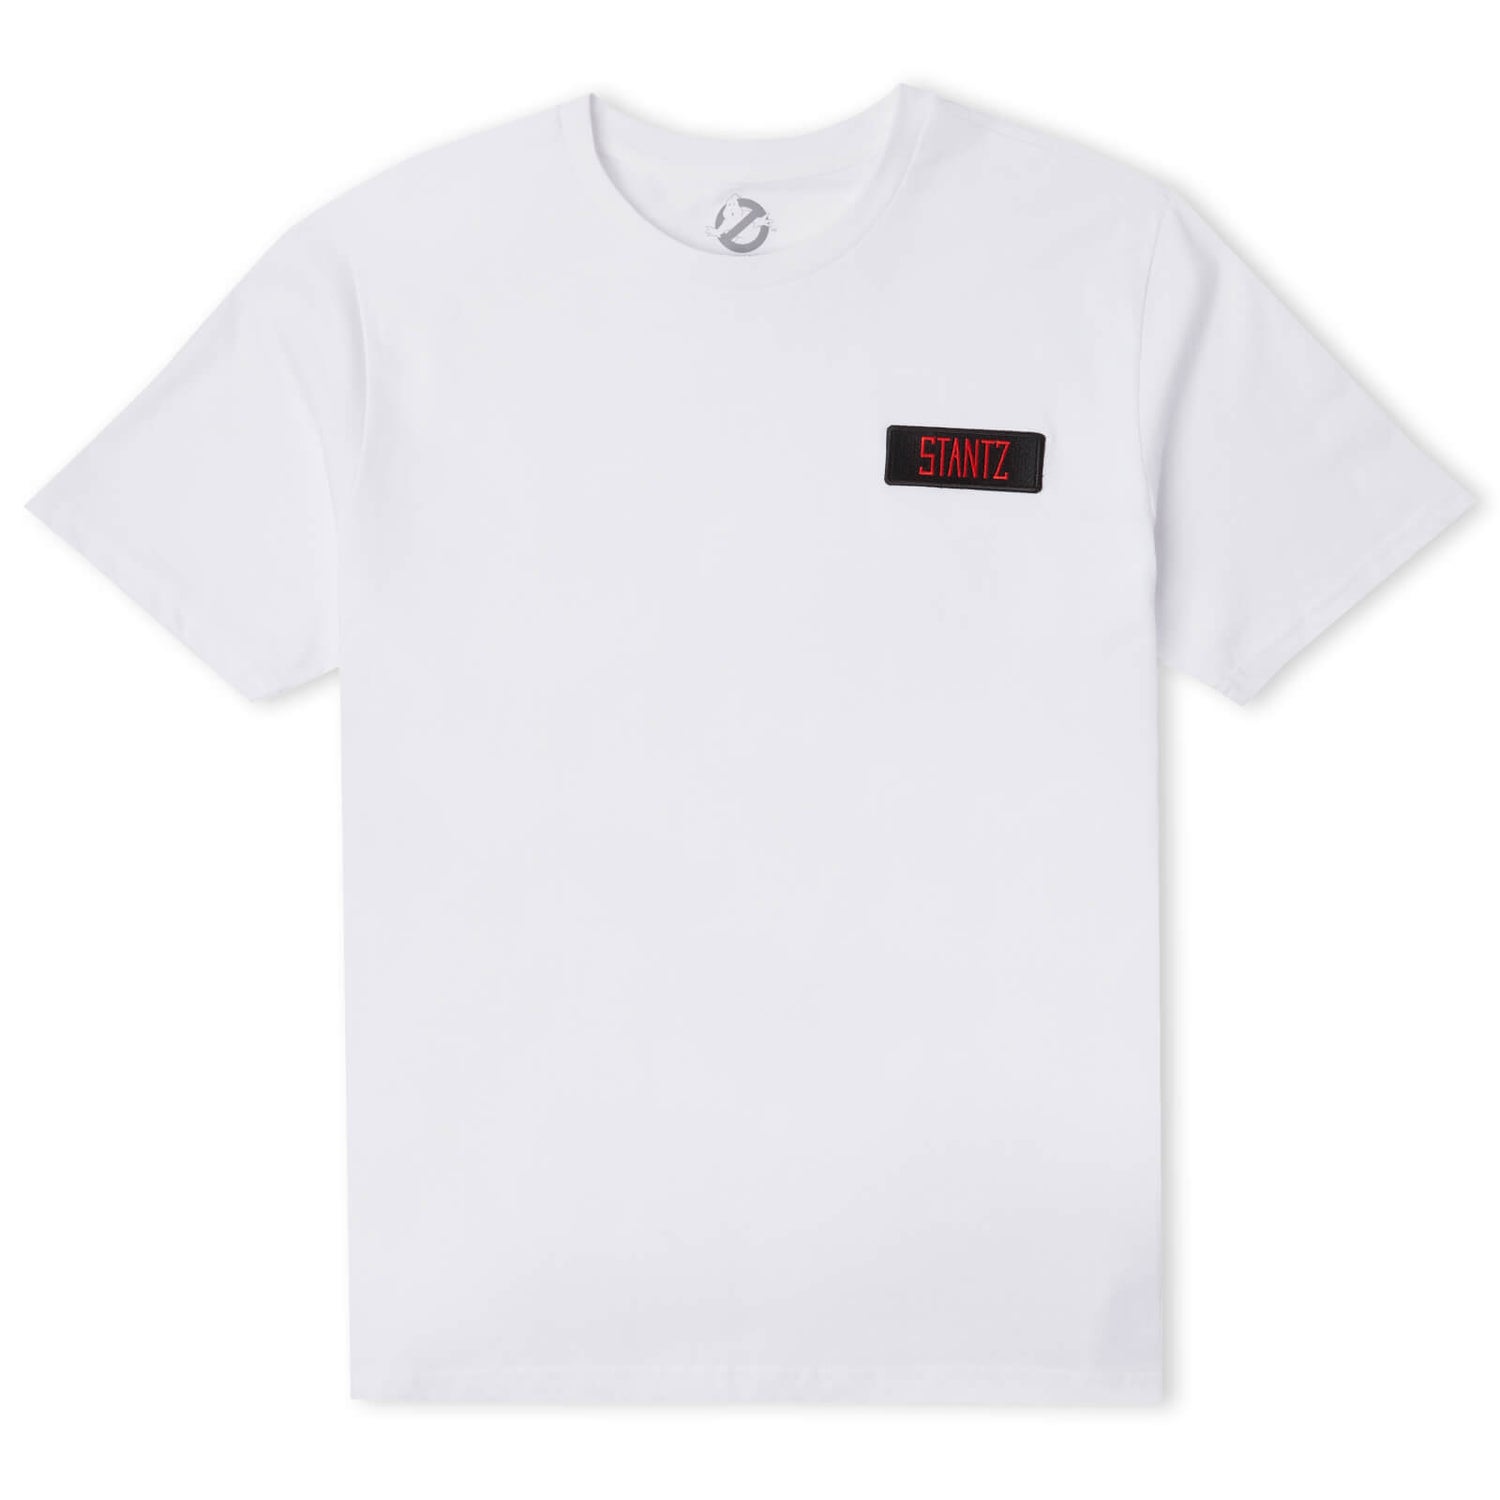 Ghostbusters Stantz Unisex T-Shirt - White